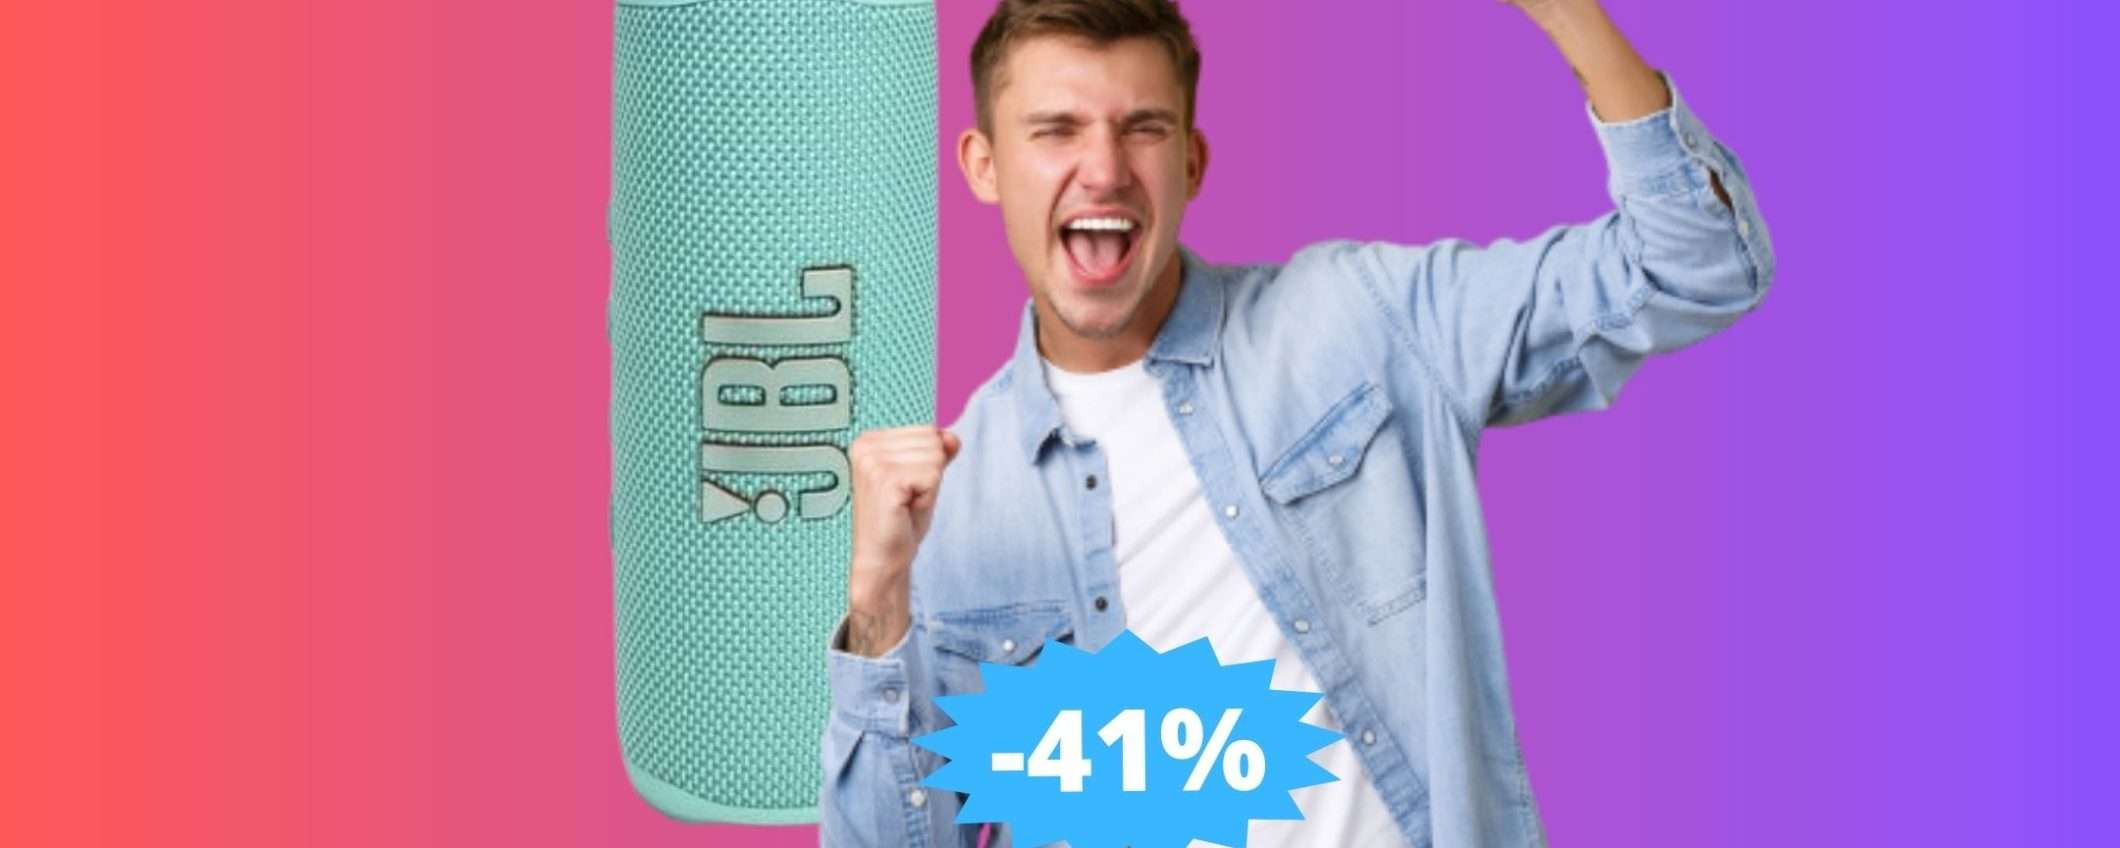 Speaker Bluetooth JBL Flip 6: MEGA sconto del 41% su Amazon